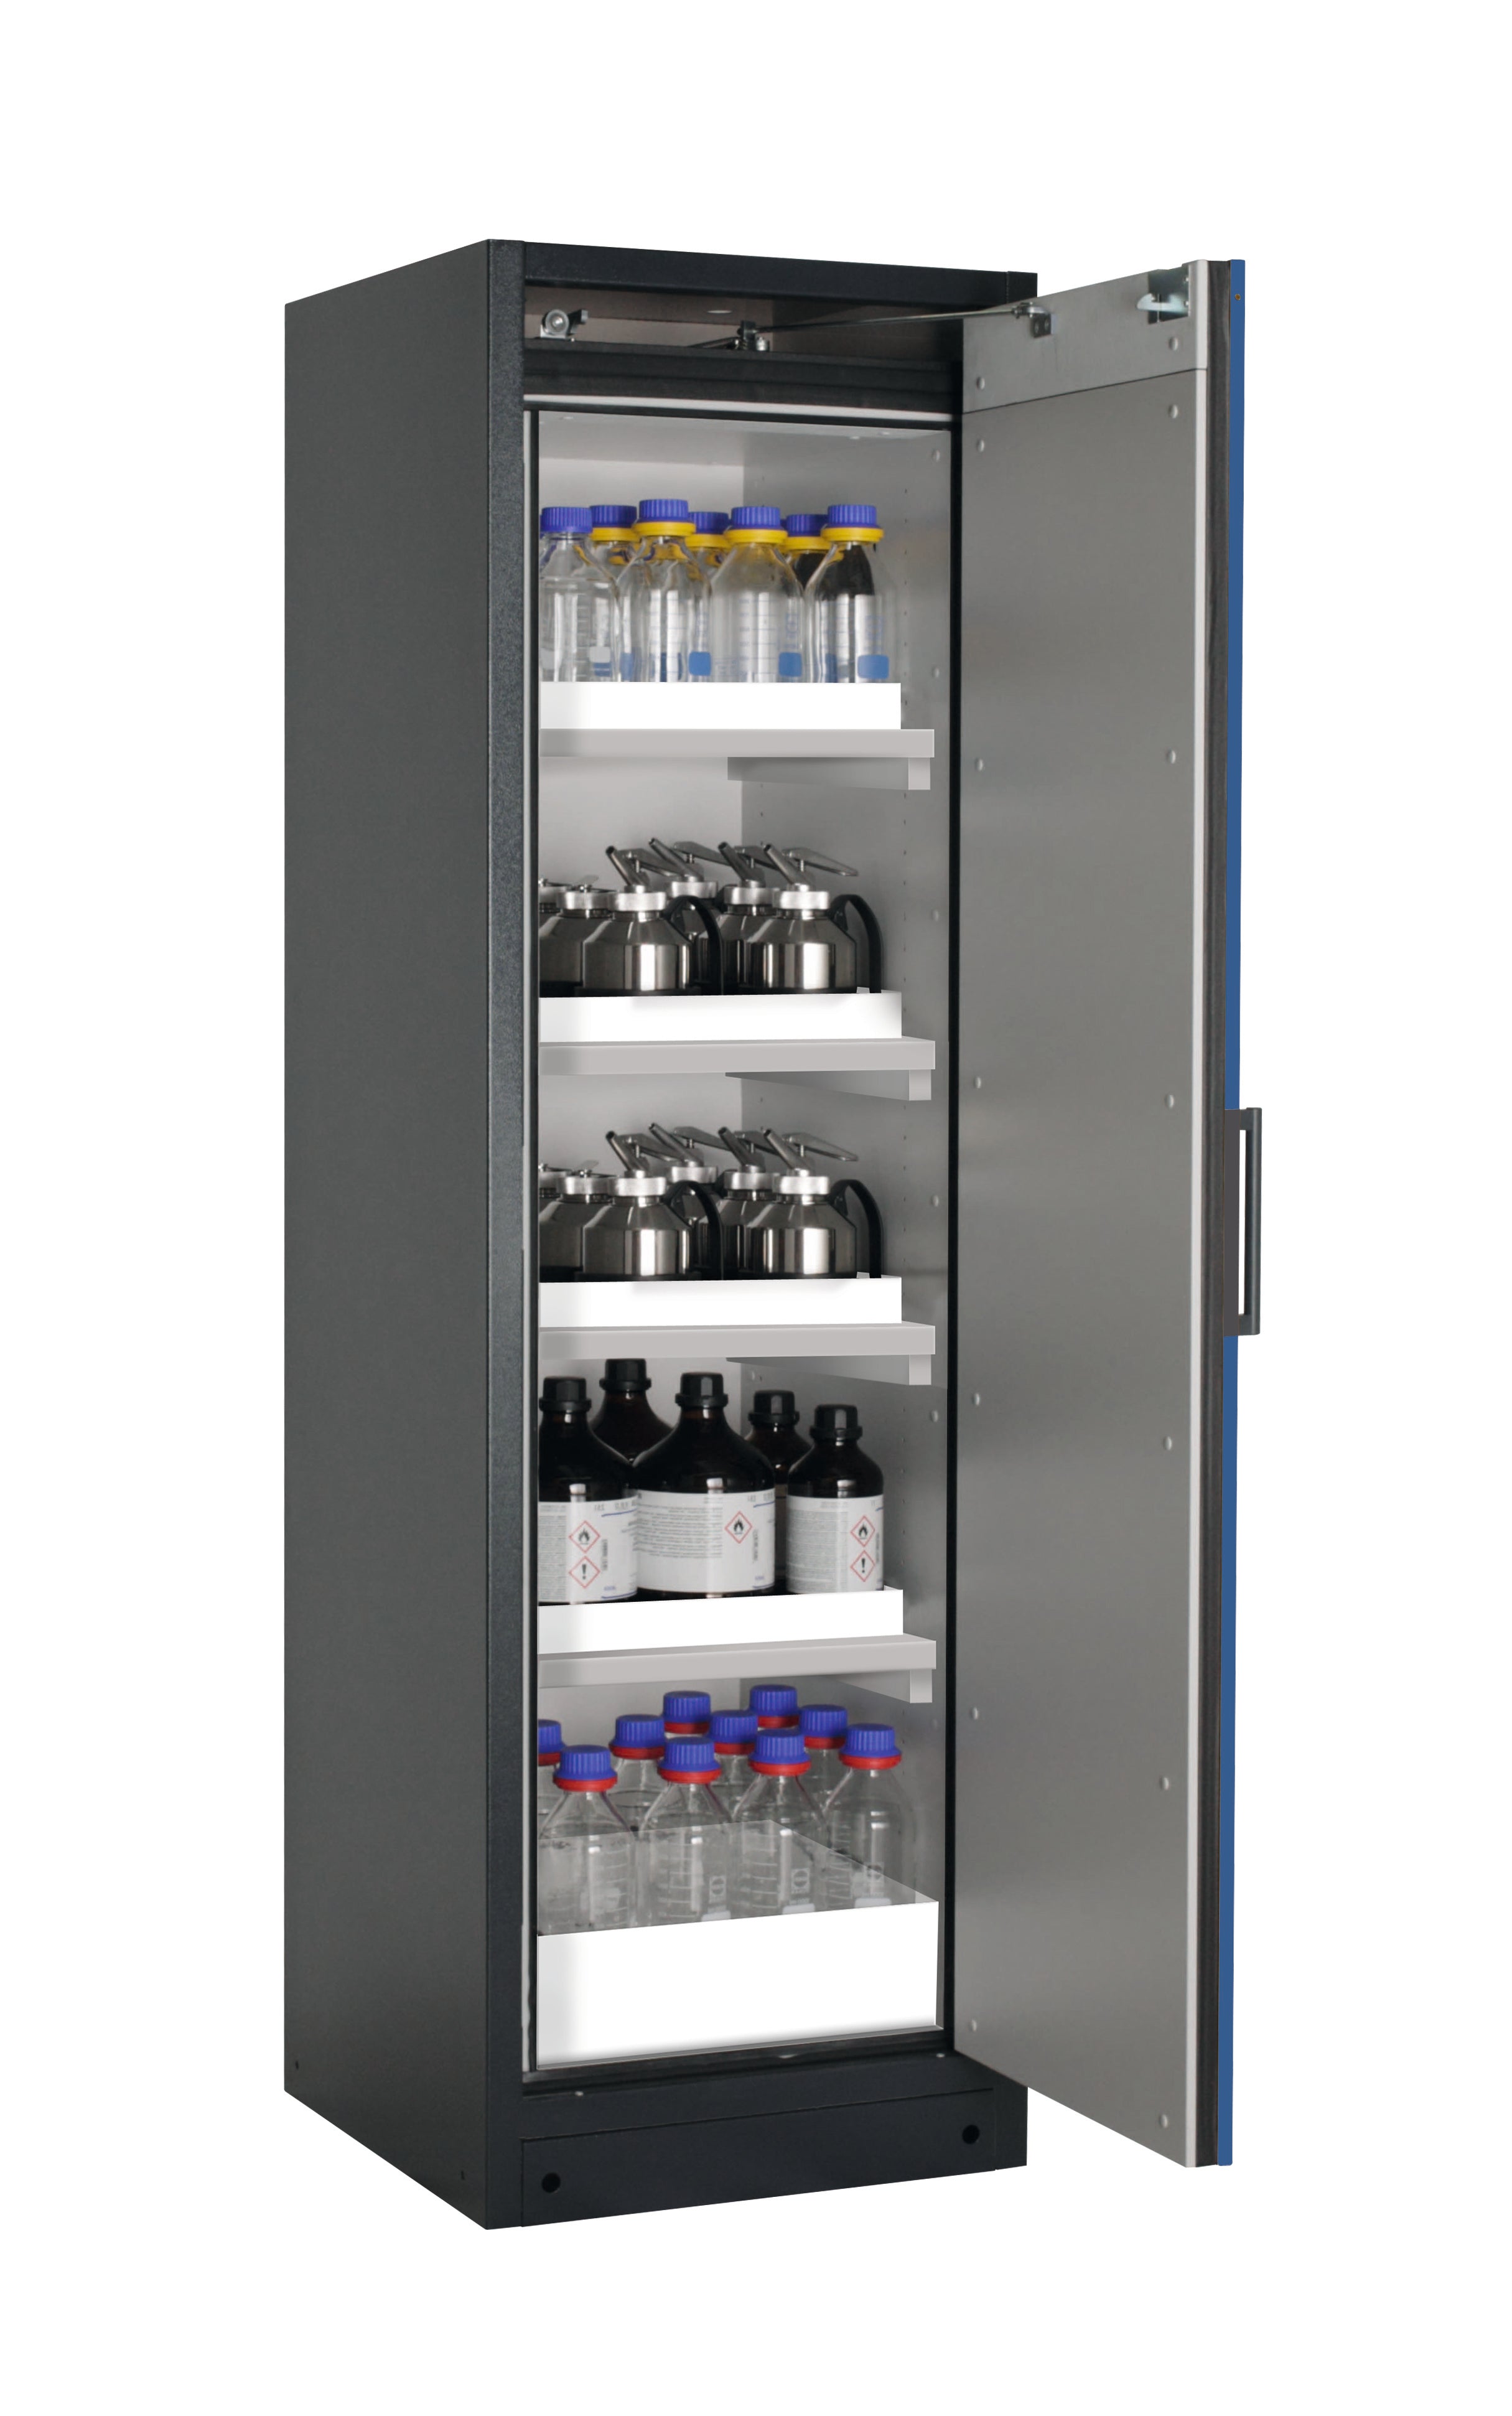 Type 90 safety storage cabinet Q-PEGASUS-90 model Q90.195.060.WDACR in gentian blue RAL 5010 with 4x tray shelf (standard) (polypropylene),